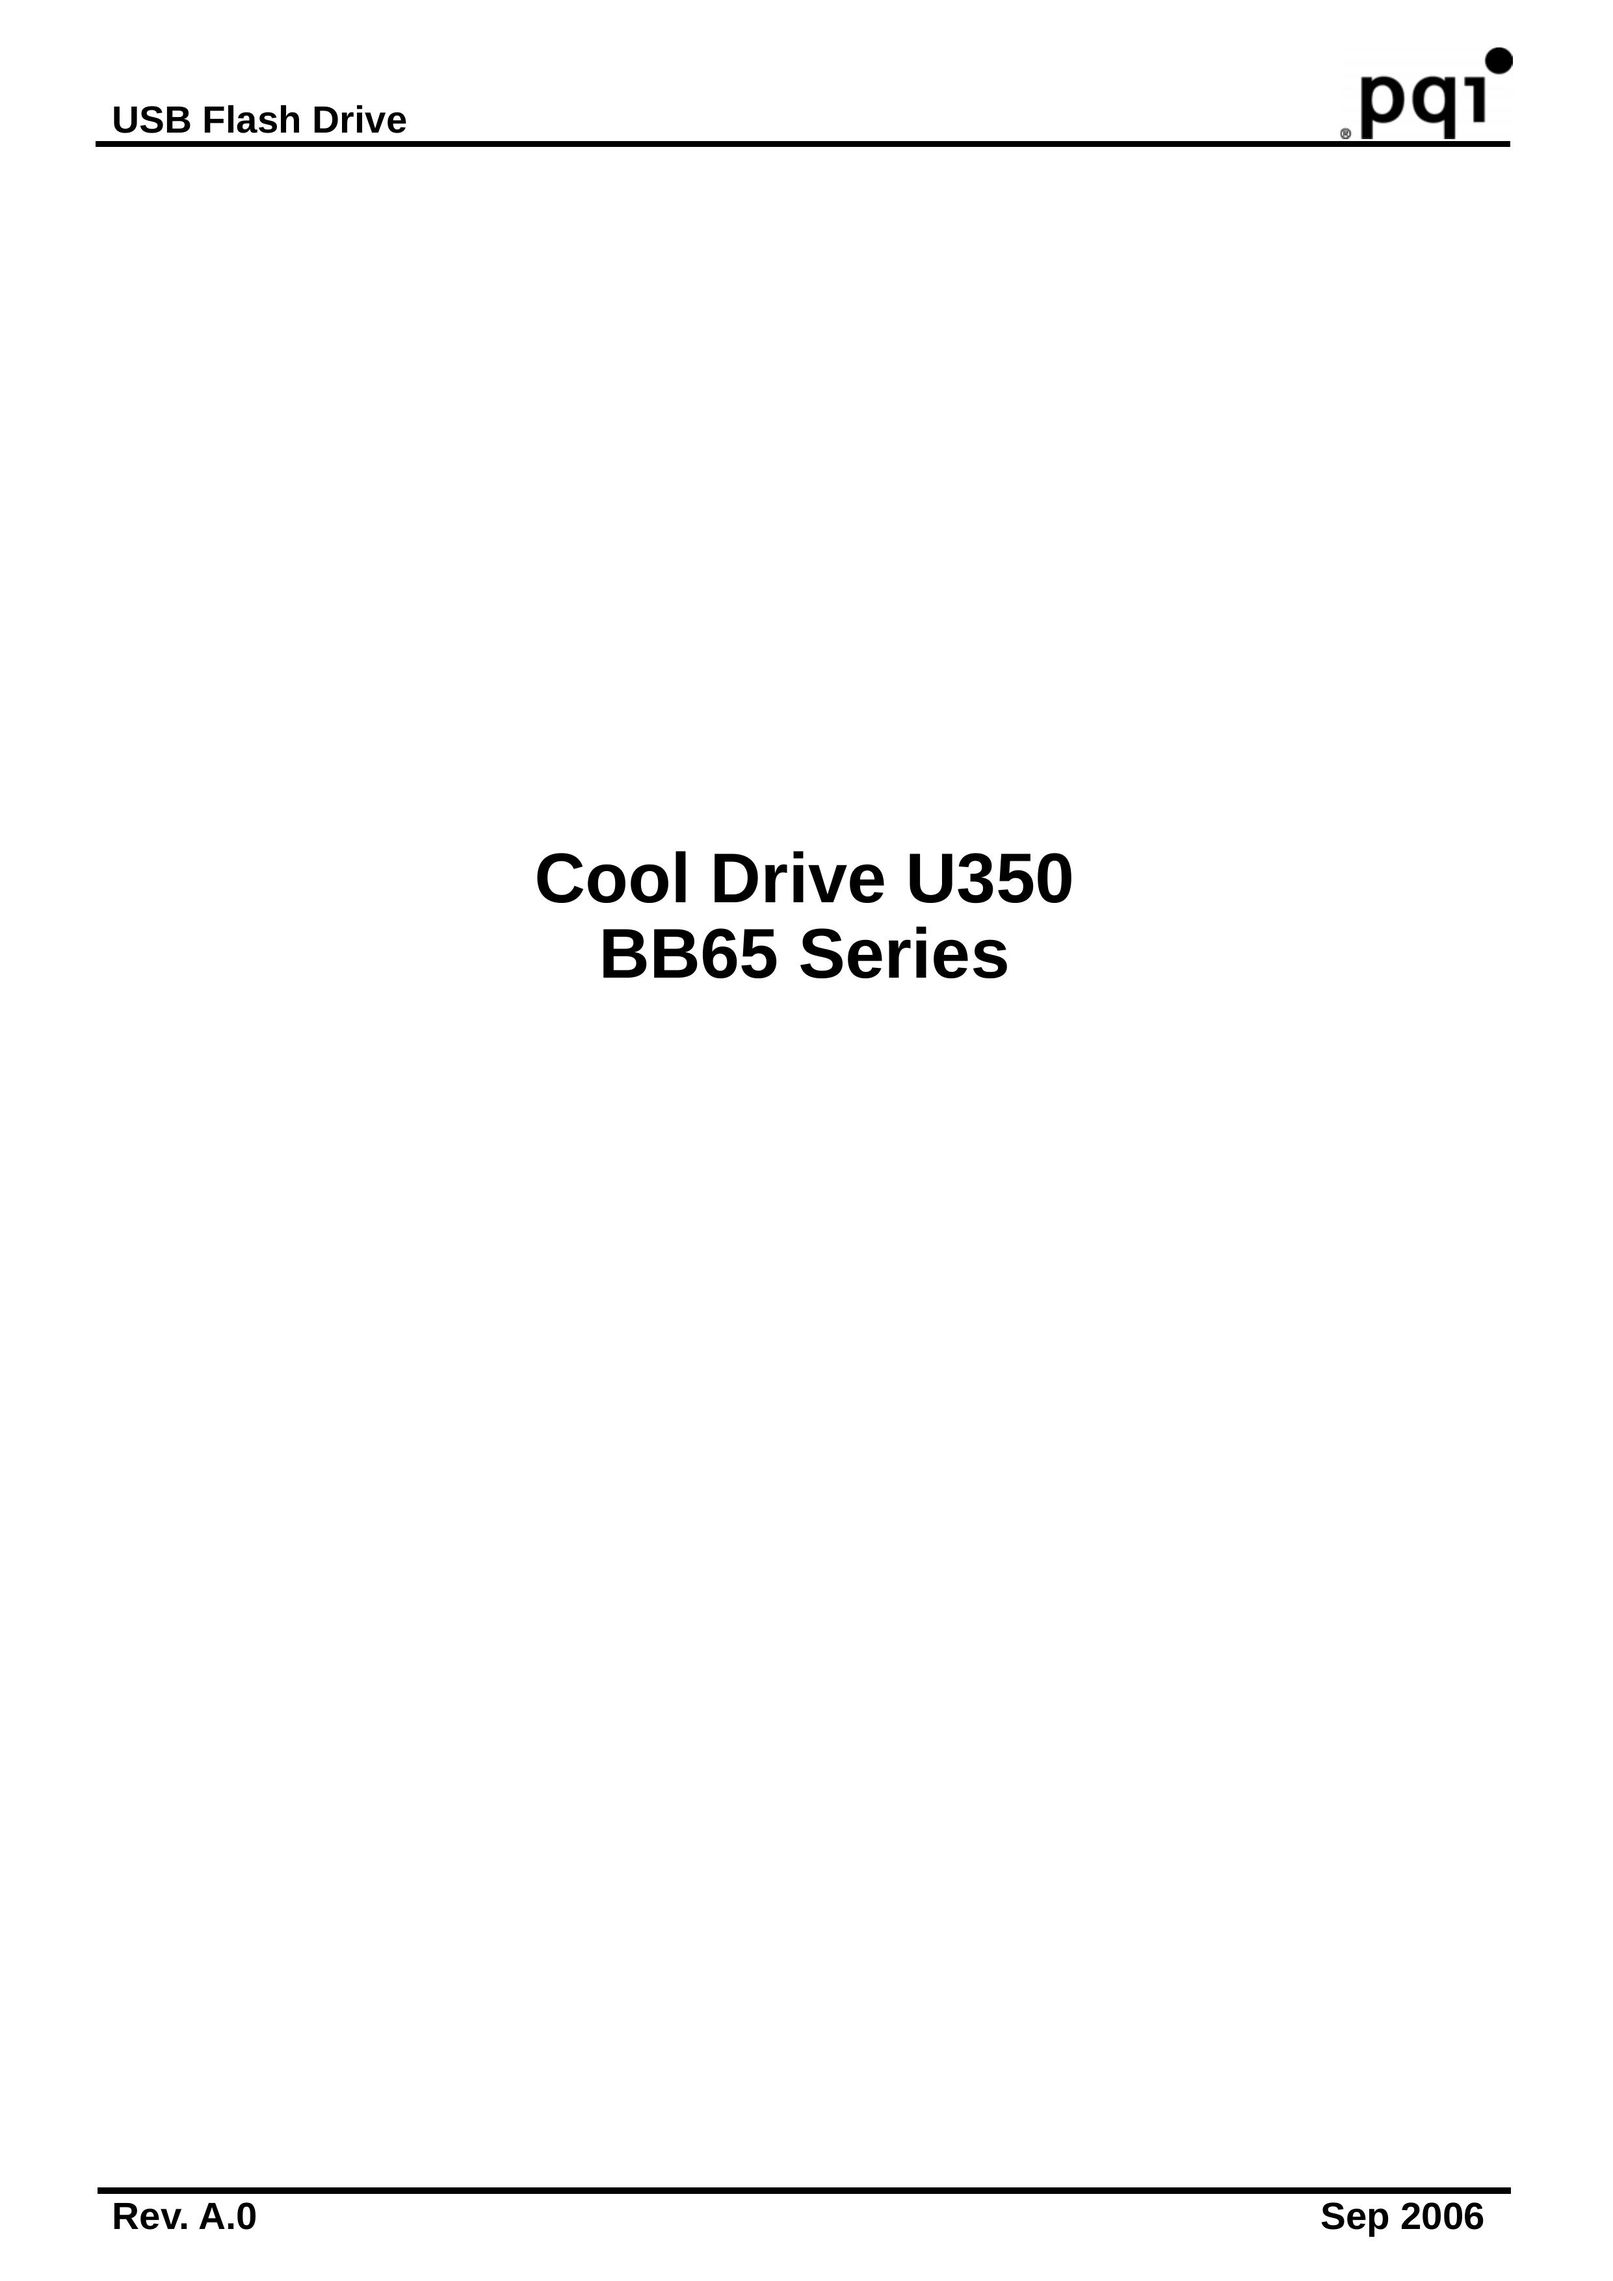 PQI U350 Computer Drive User Manual